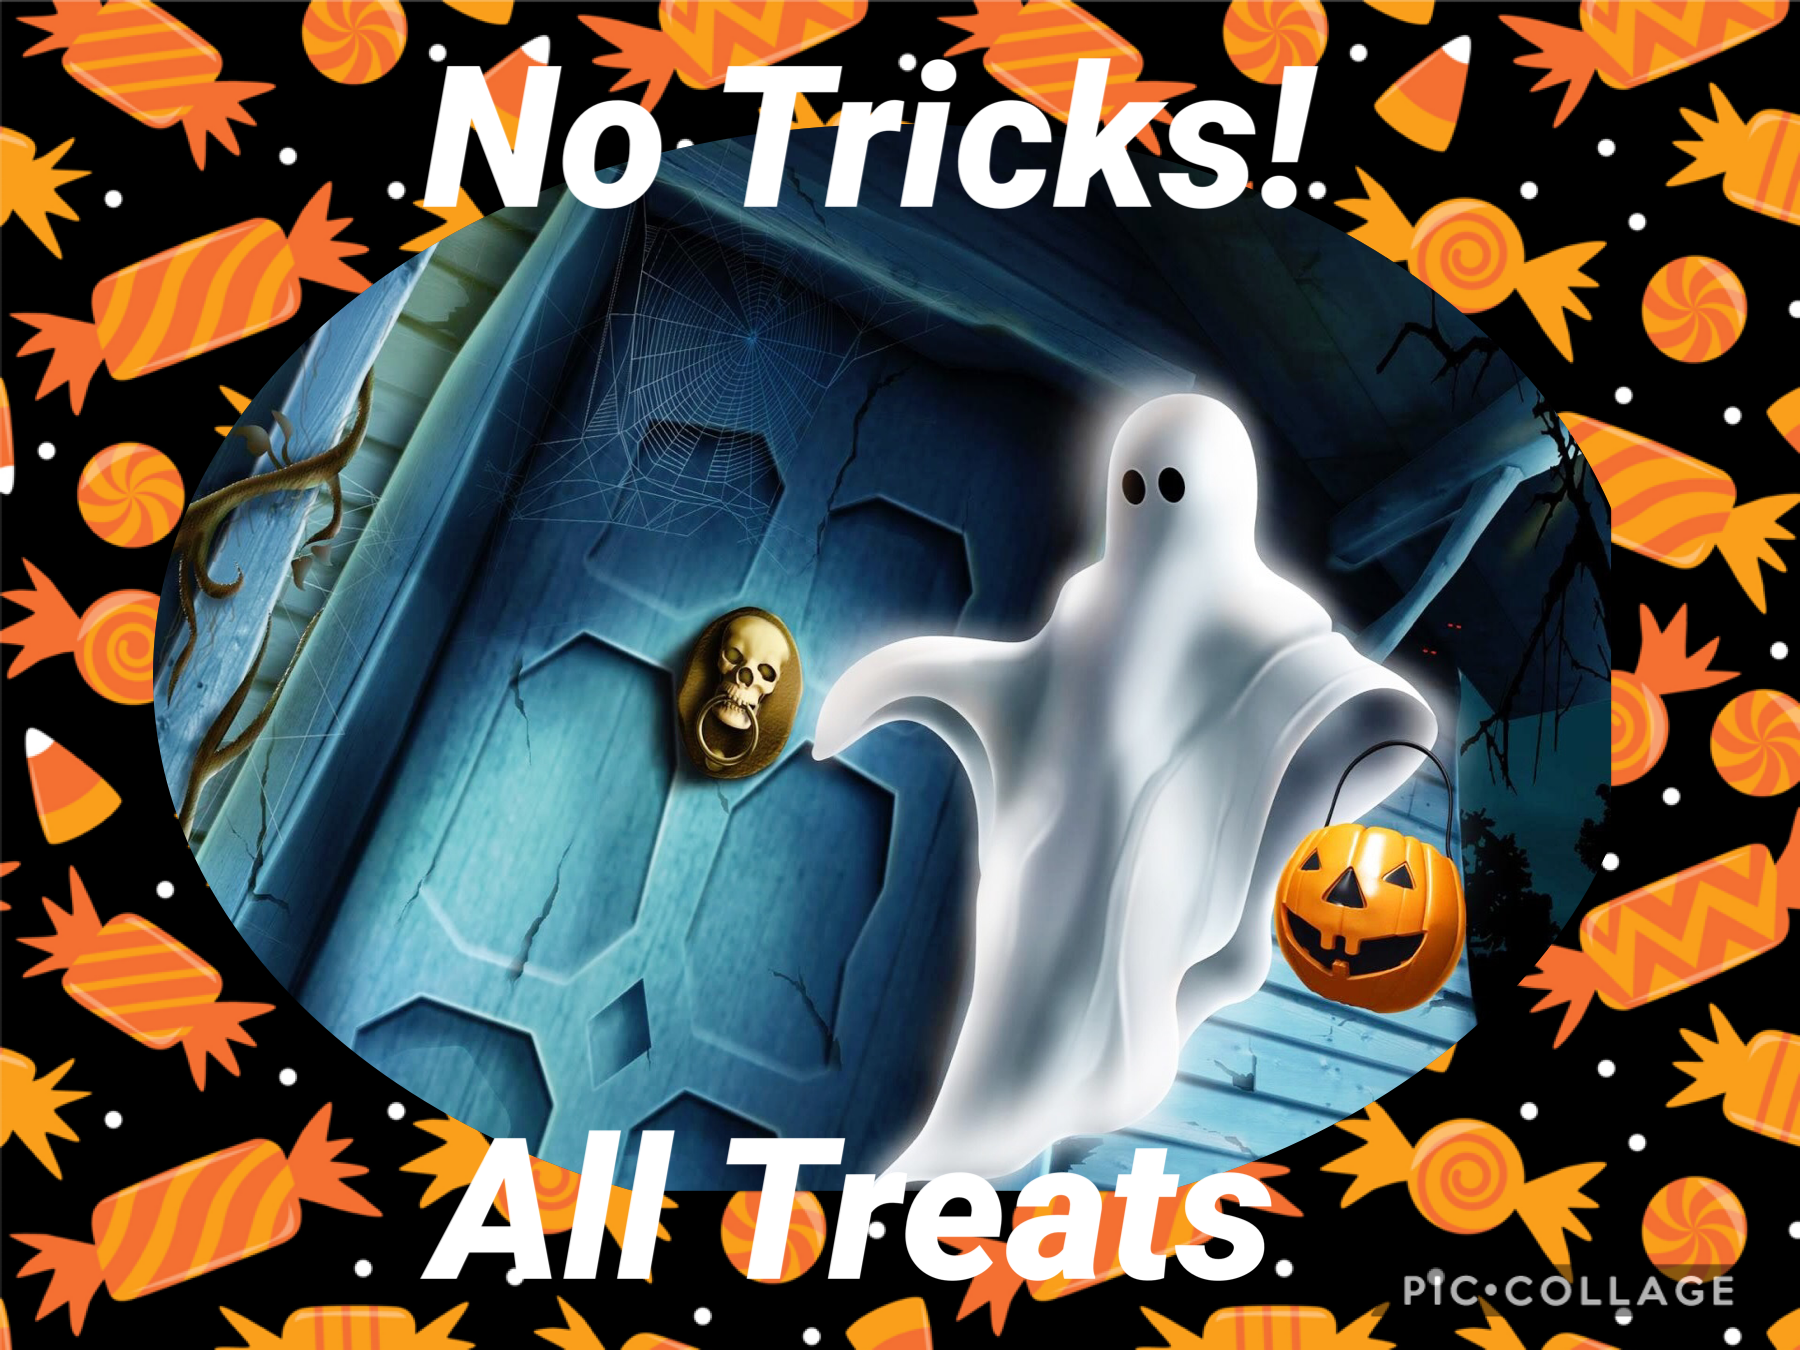 No tricks! All treats!